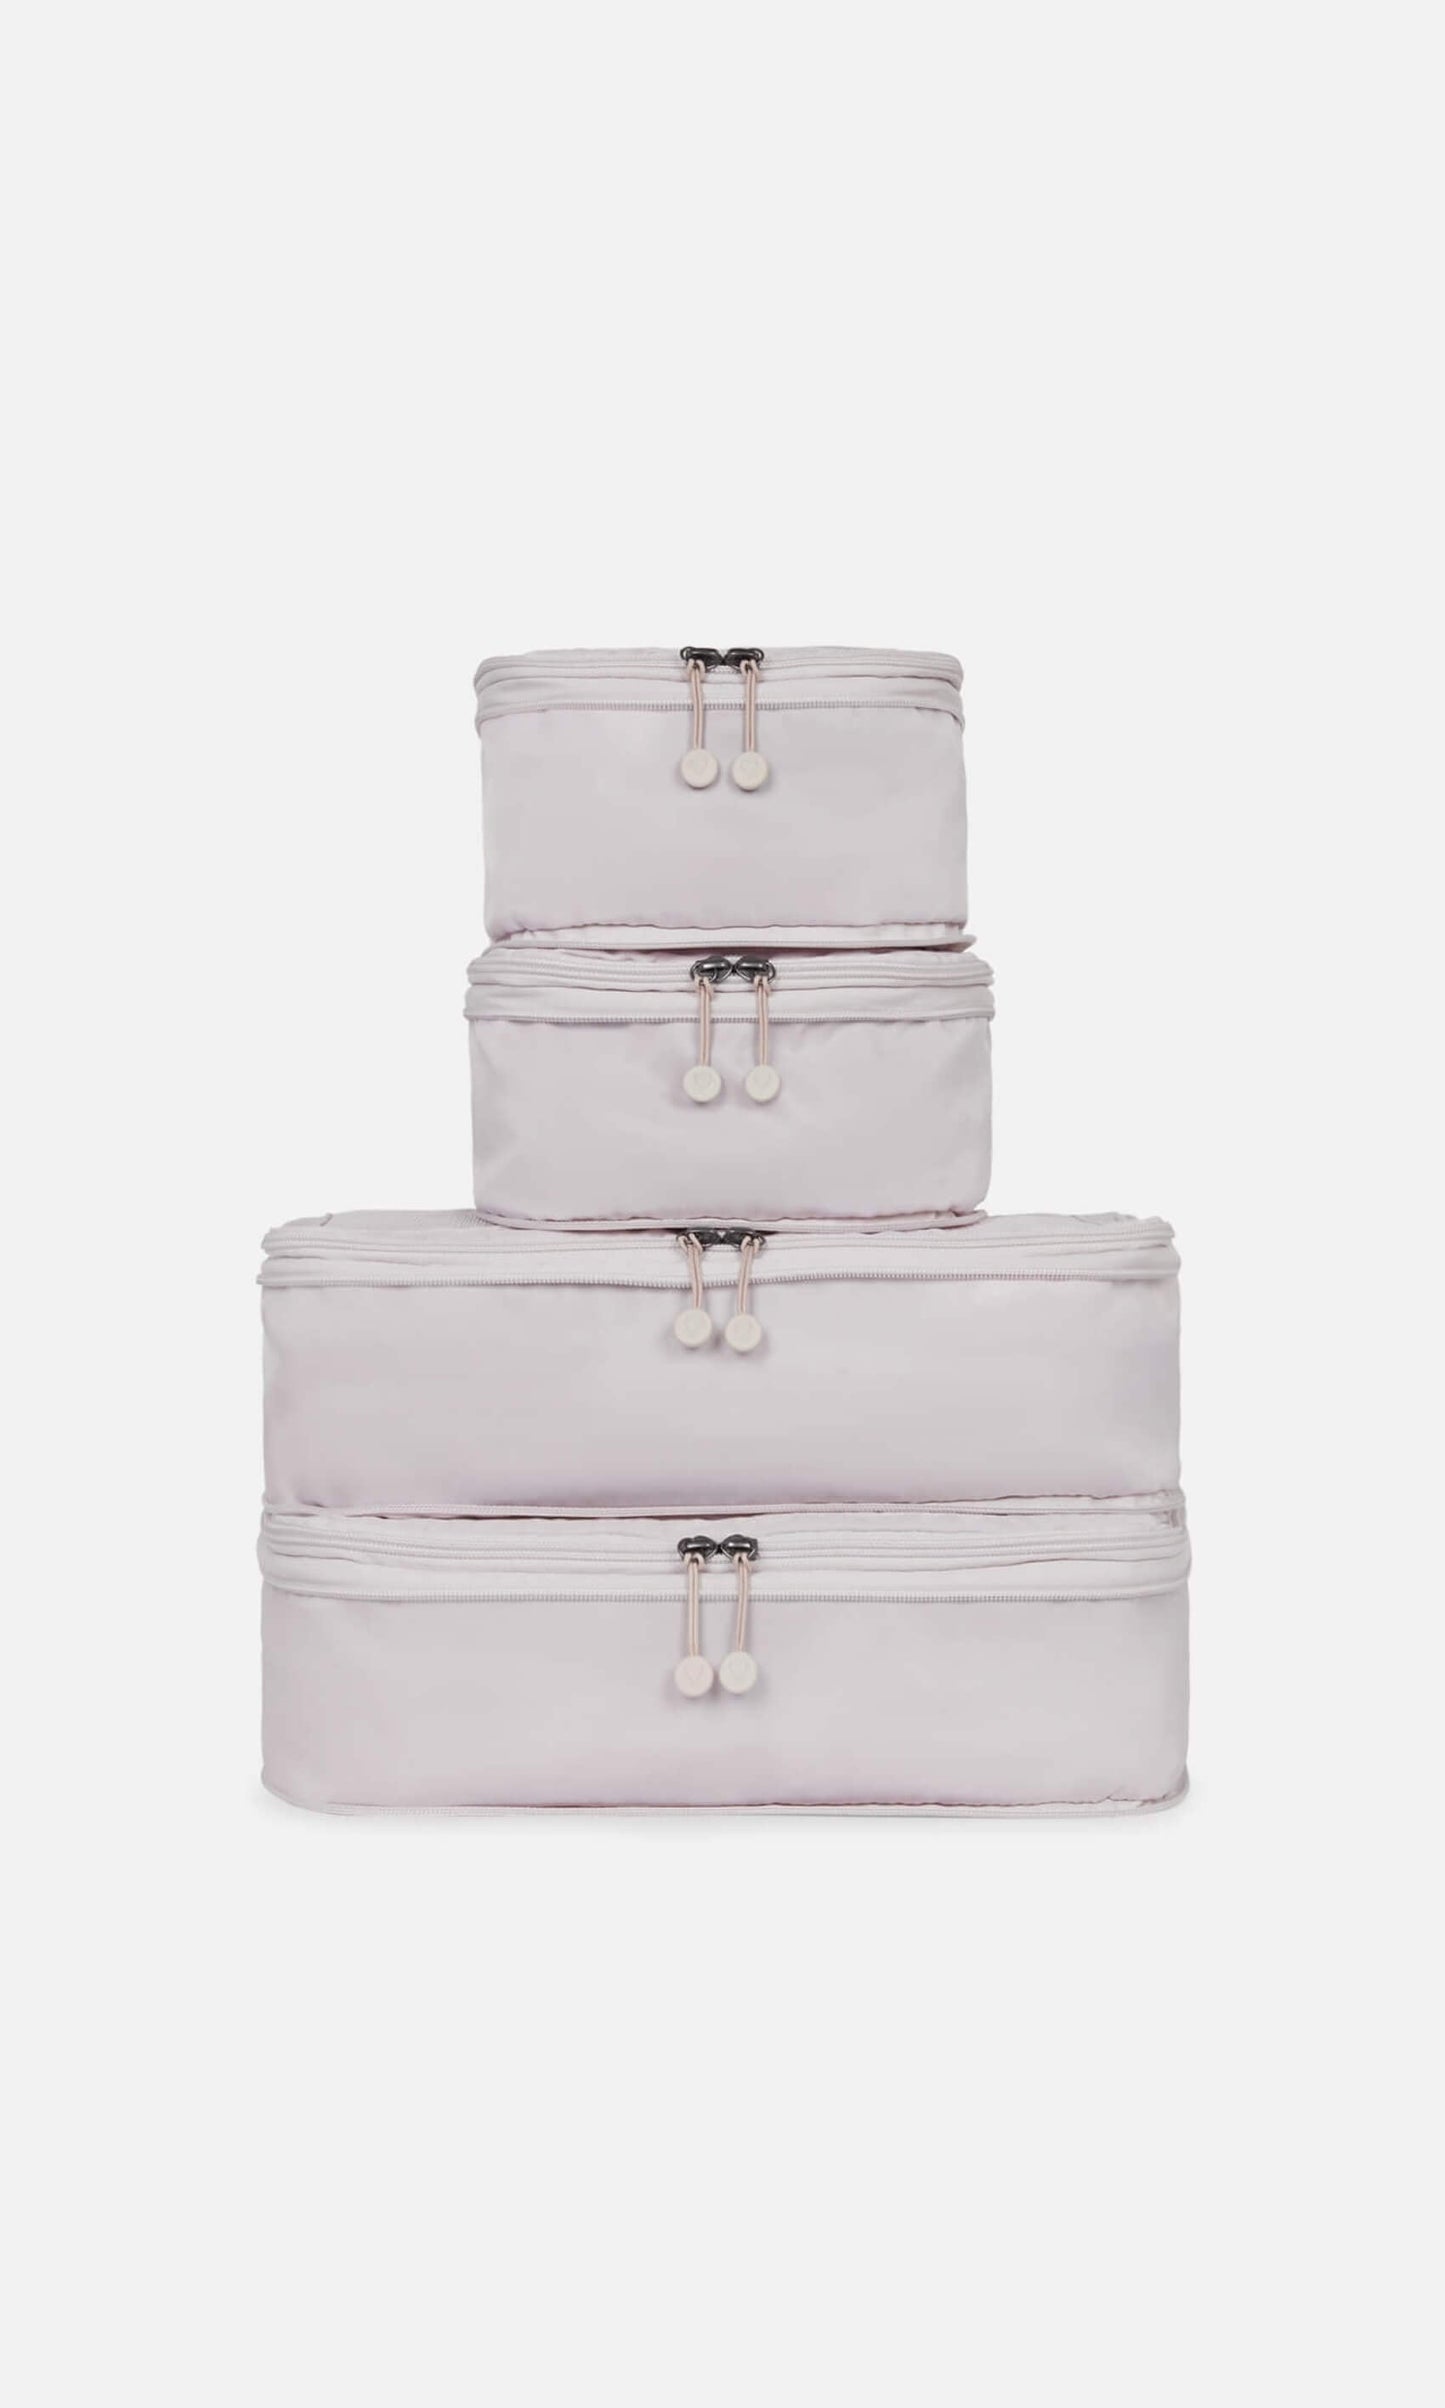 Antler Luggage -  Chelsea 4 packing cubes in blush - Accessories Chelsea 4 Packing Cubes Blush (Pink) | Lifestyle Bags | Antler UK